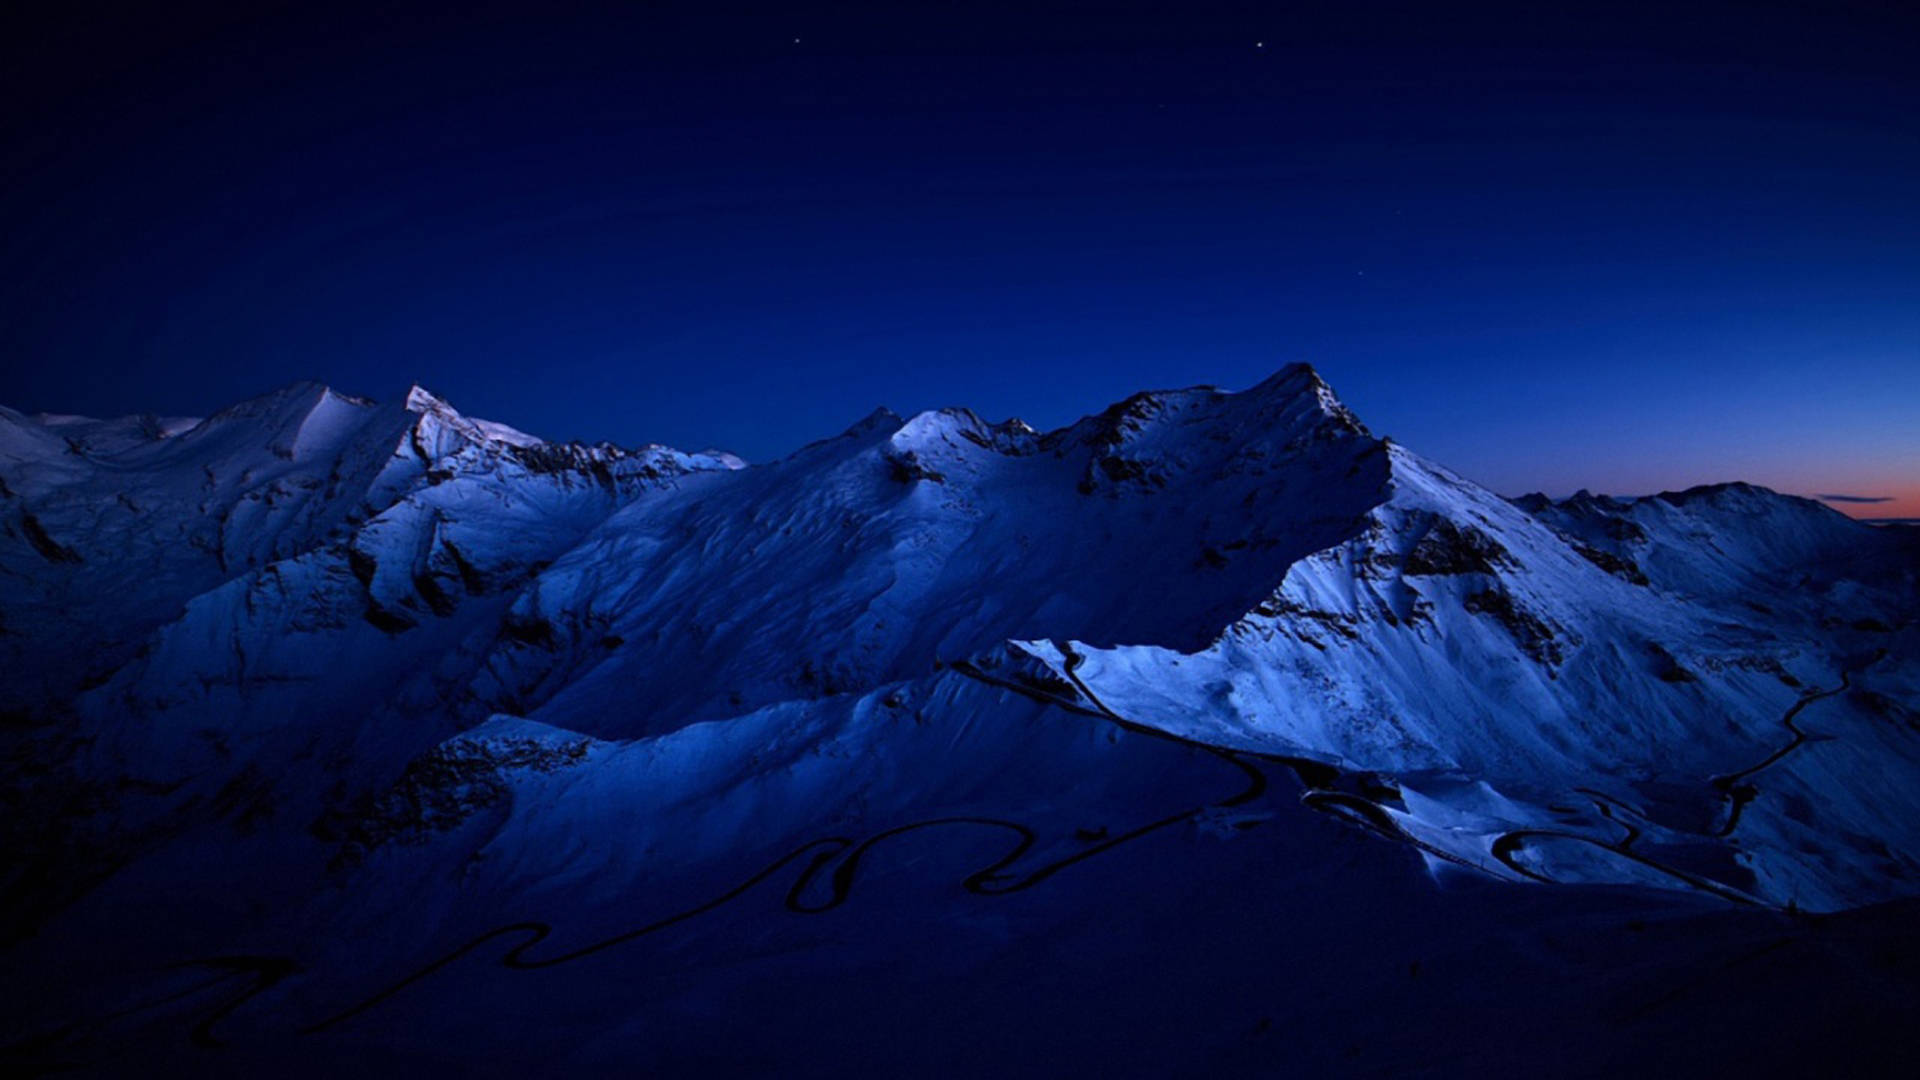 Dark Blue Aesthetic Snow-capped Mountain